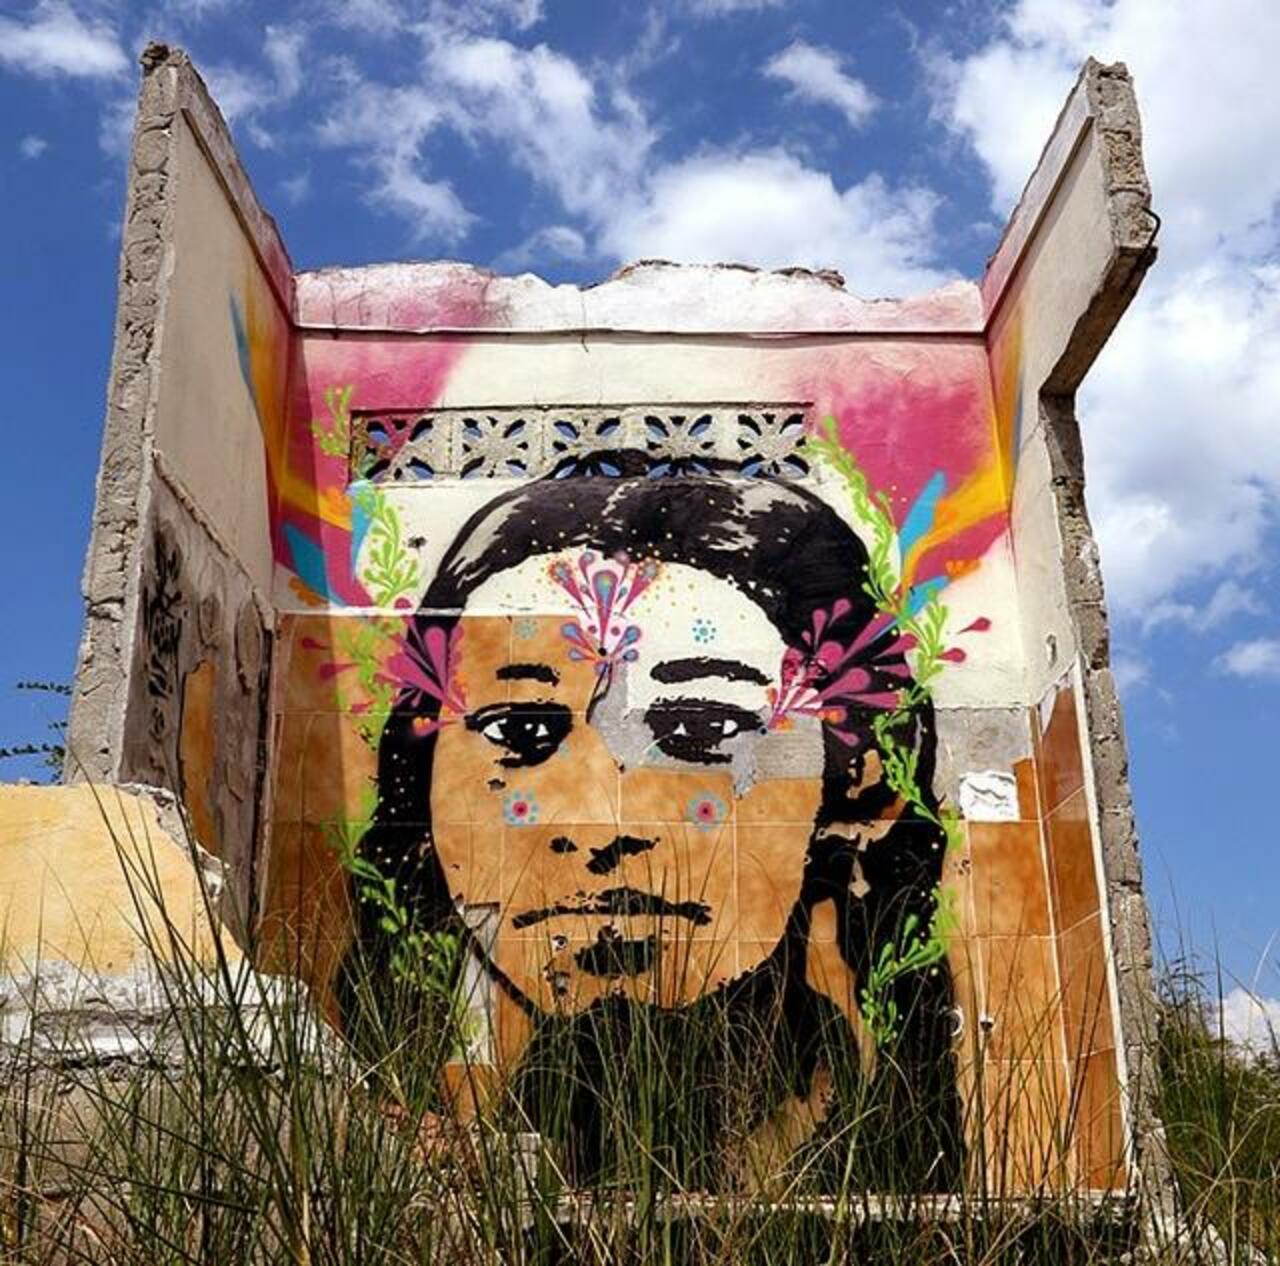 Sistemas4s: Just completed! 
New Street Art portrait by Stinkfish 

#art #mural #graffiti #streetart http://t.co/j9v1MpHUZy